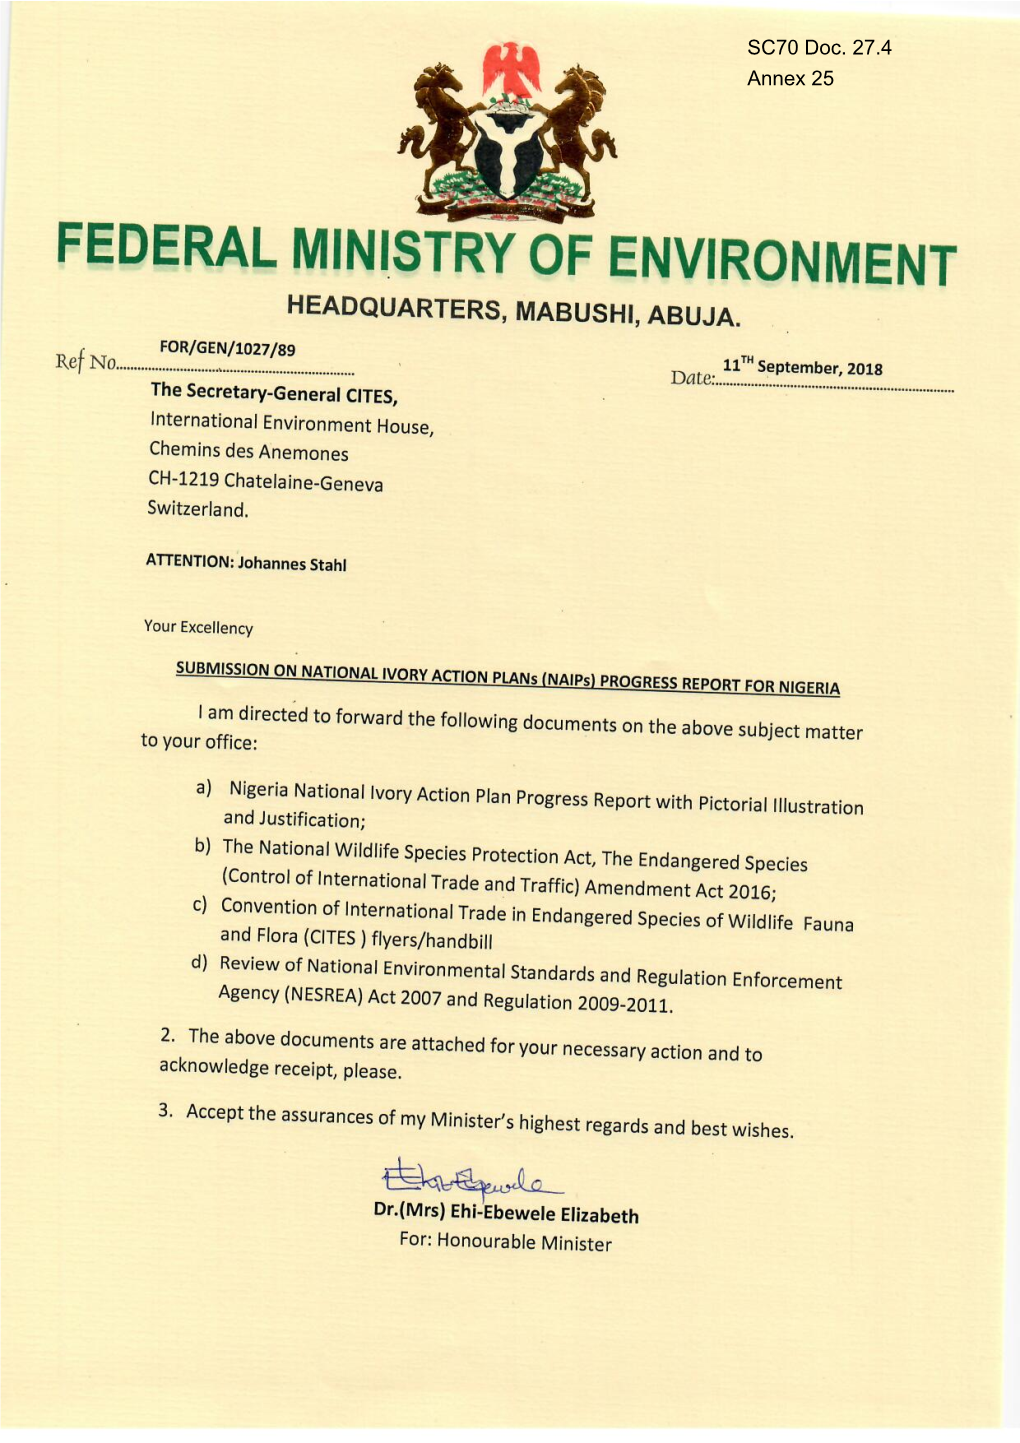 Nigeria National Ivory Action Plan